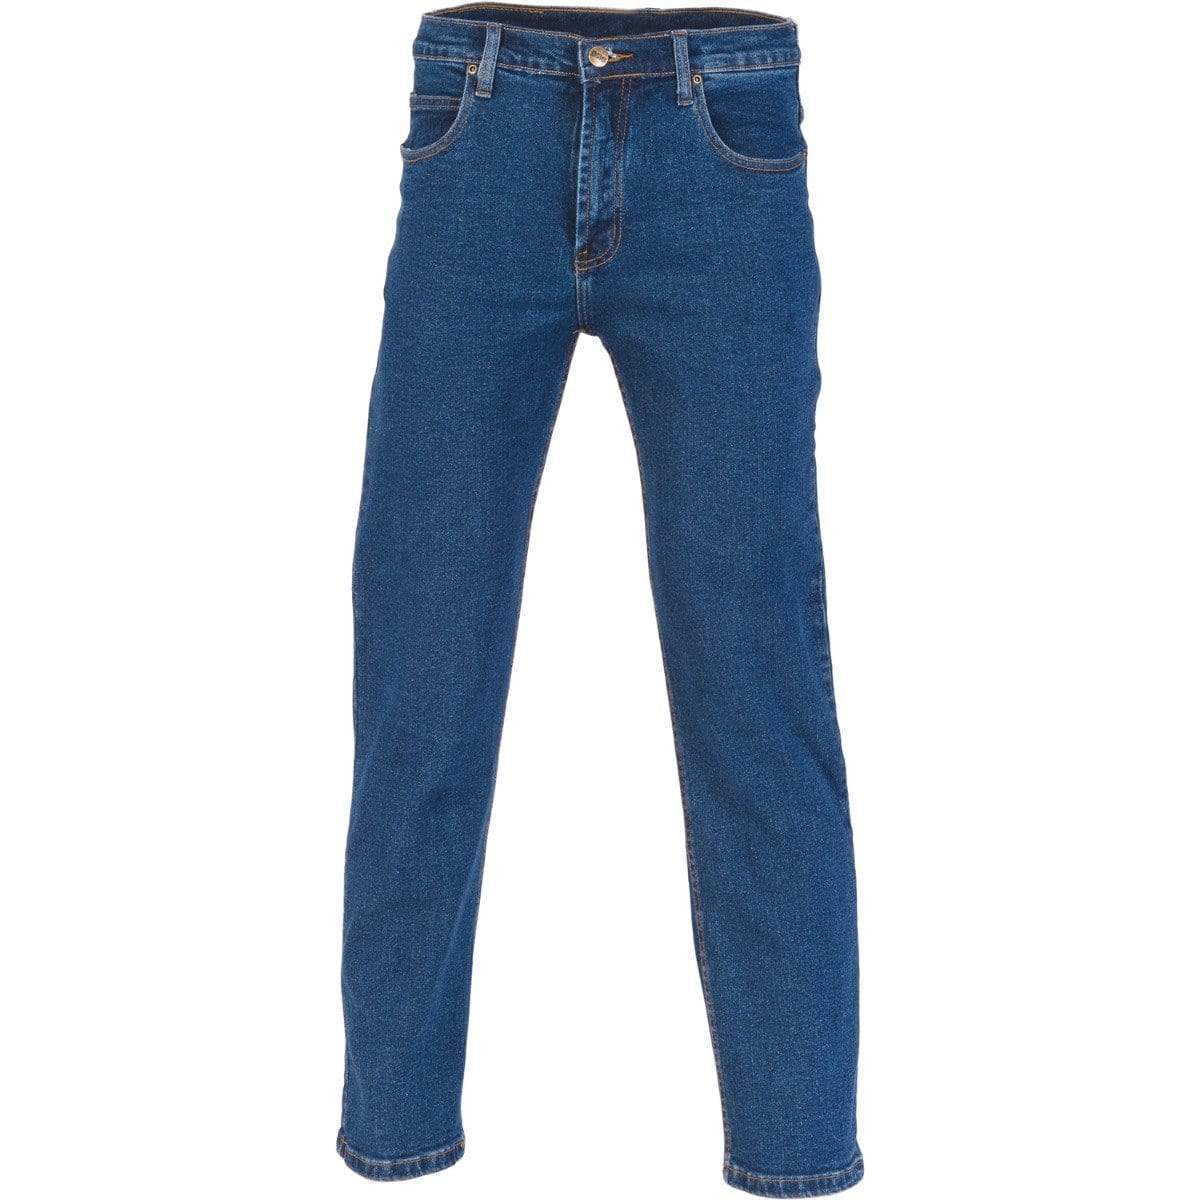 Dnc Workwear Denim Stretch Jeans - 3318 Work Wear DNC Workwear Blue 72R 